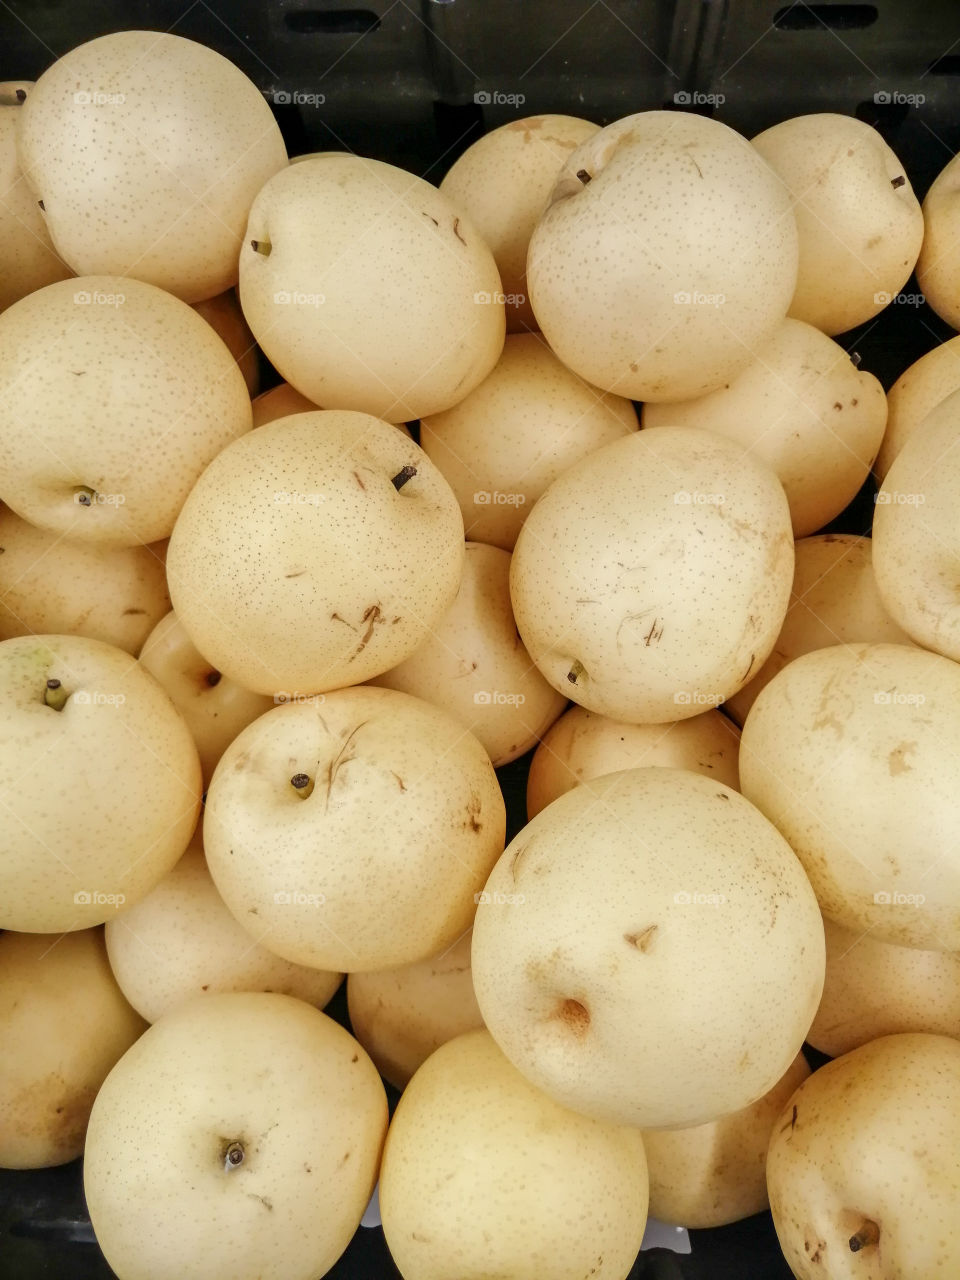 Bulk century pears in a grocery shop